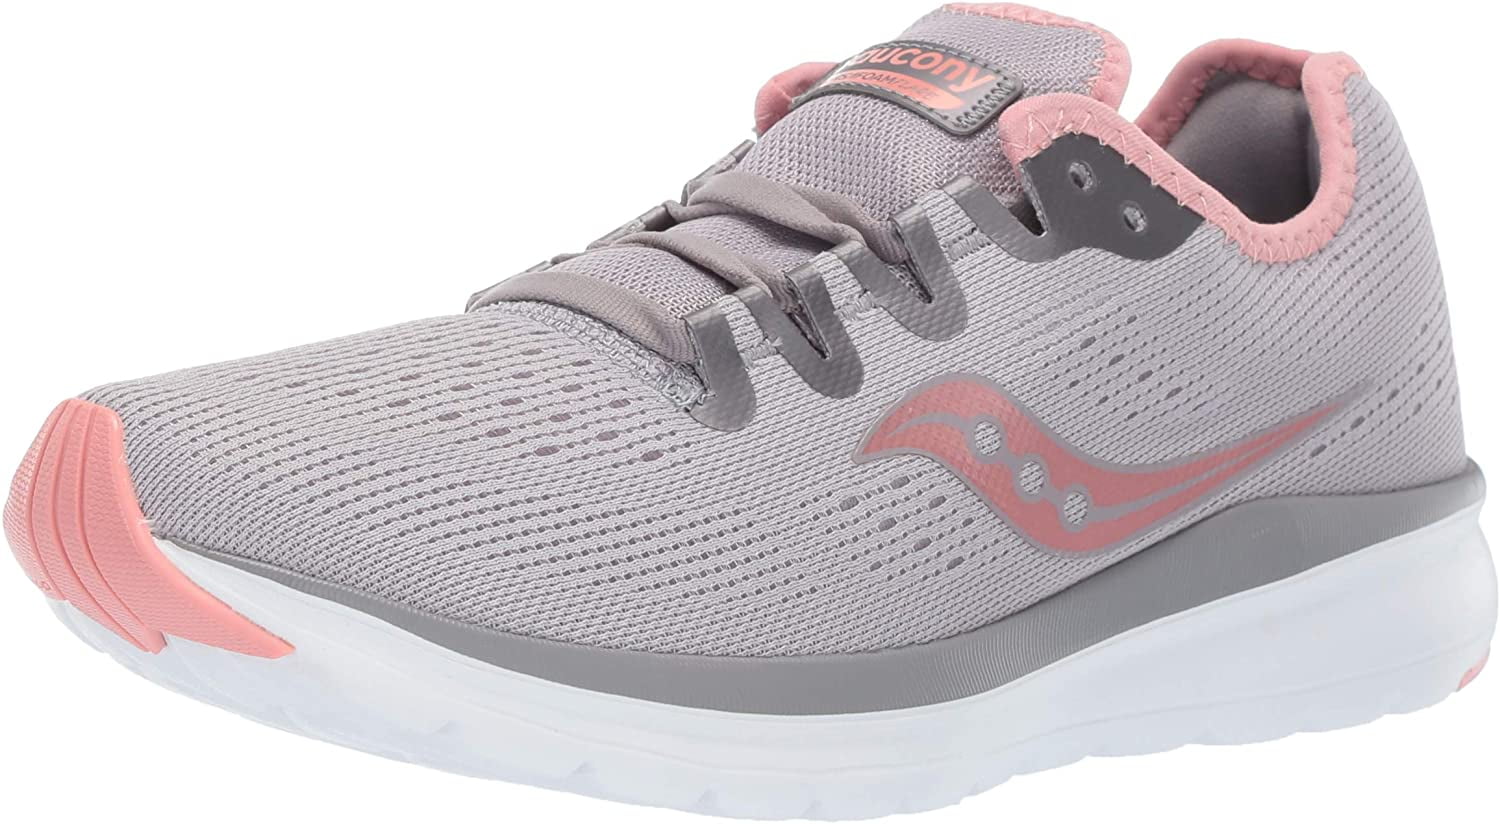 Versafoam Flare Running Shoe, Grey/Pink 